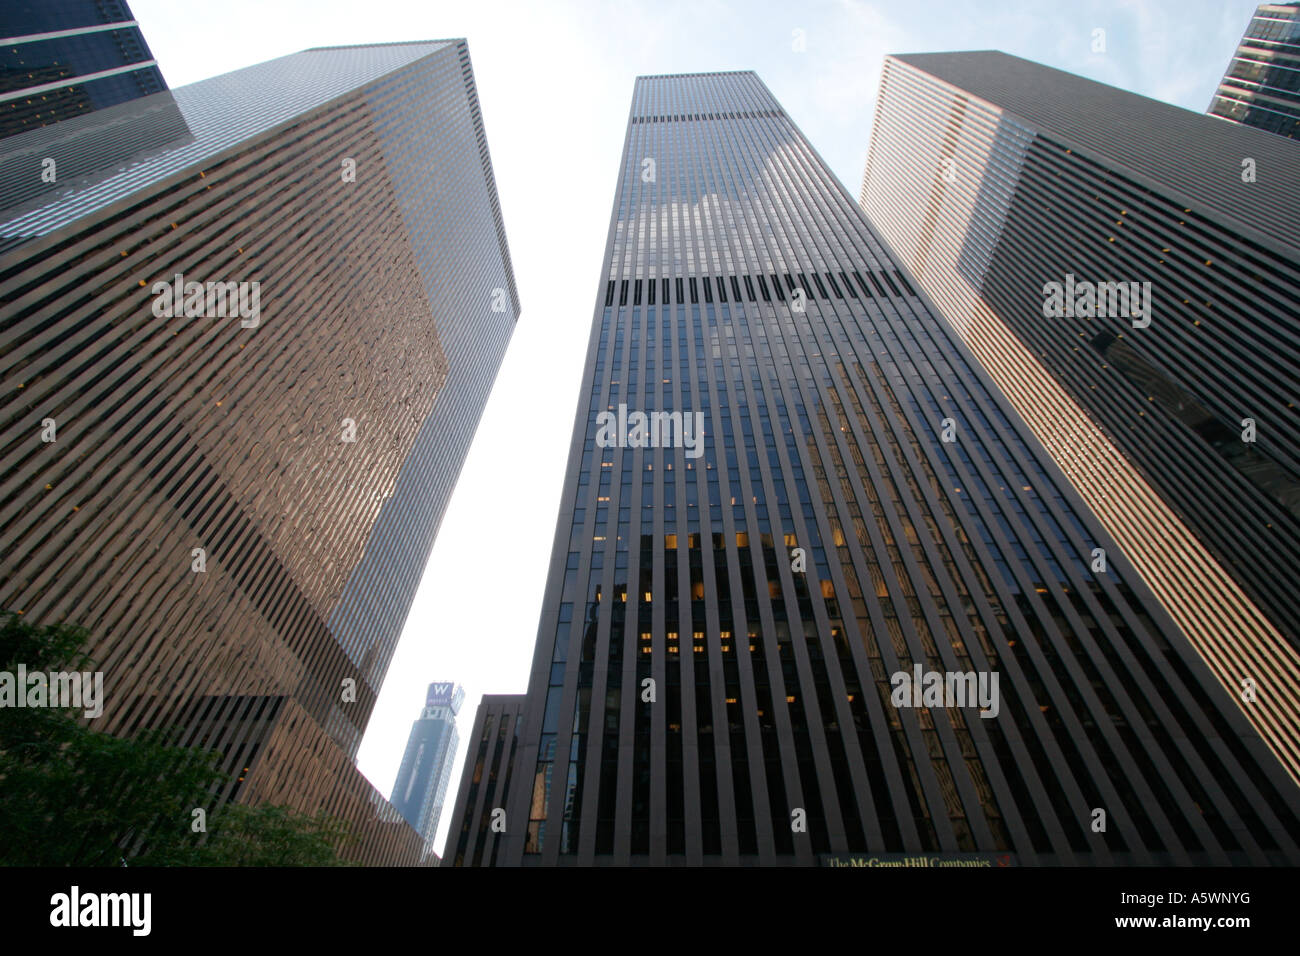 McGraw-Hill Companies Building, New York. Stock Photo